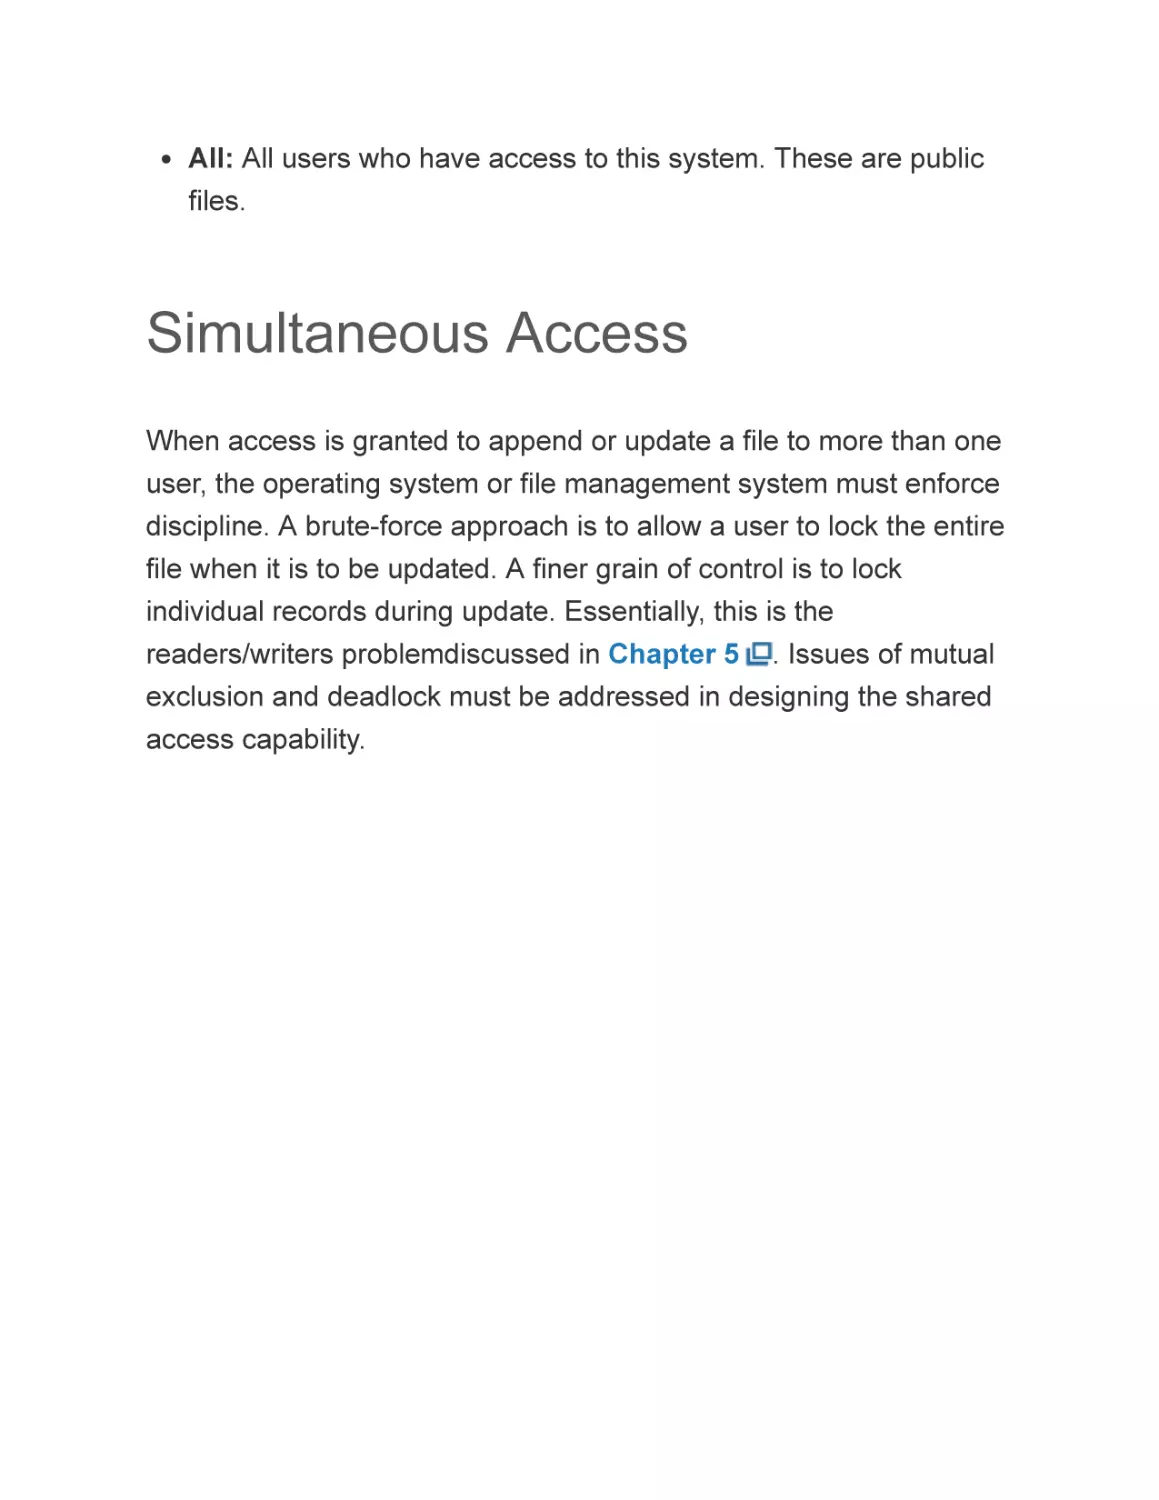 Simultaneous Access